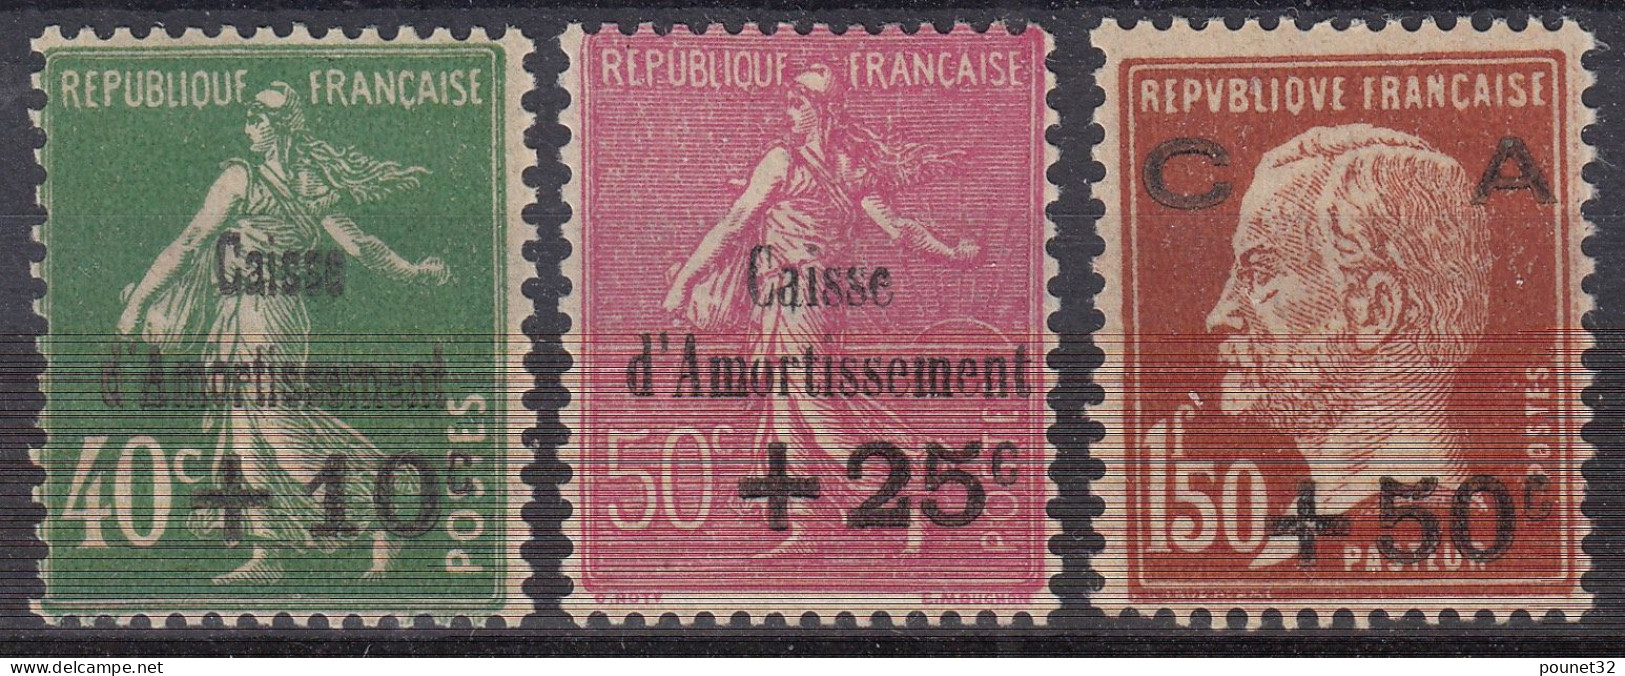 FRANCE SERIE CAISSE D'AMORTISSEMENT N° 253/255 NEUVE * GOMME TRACE DE CHARNIERE - 1927-31 Sinking Fund